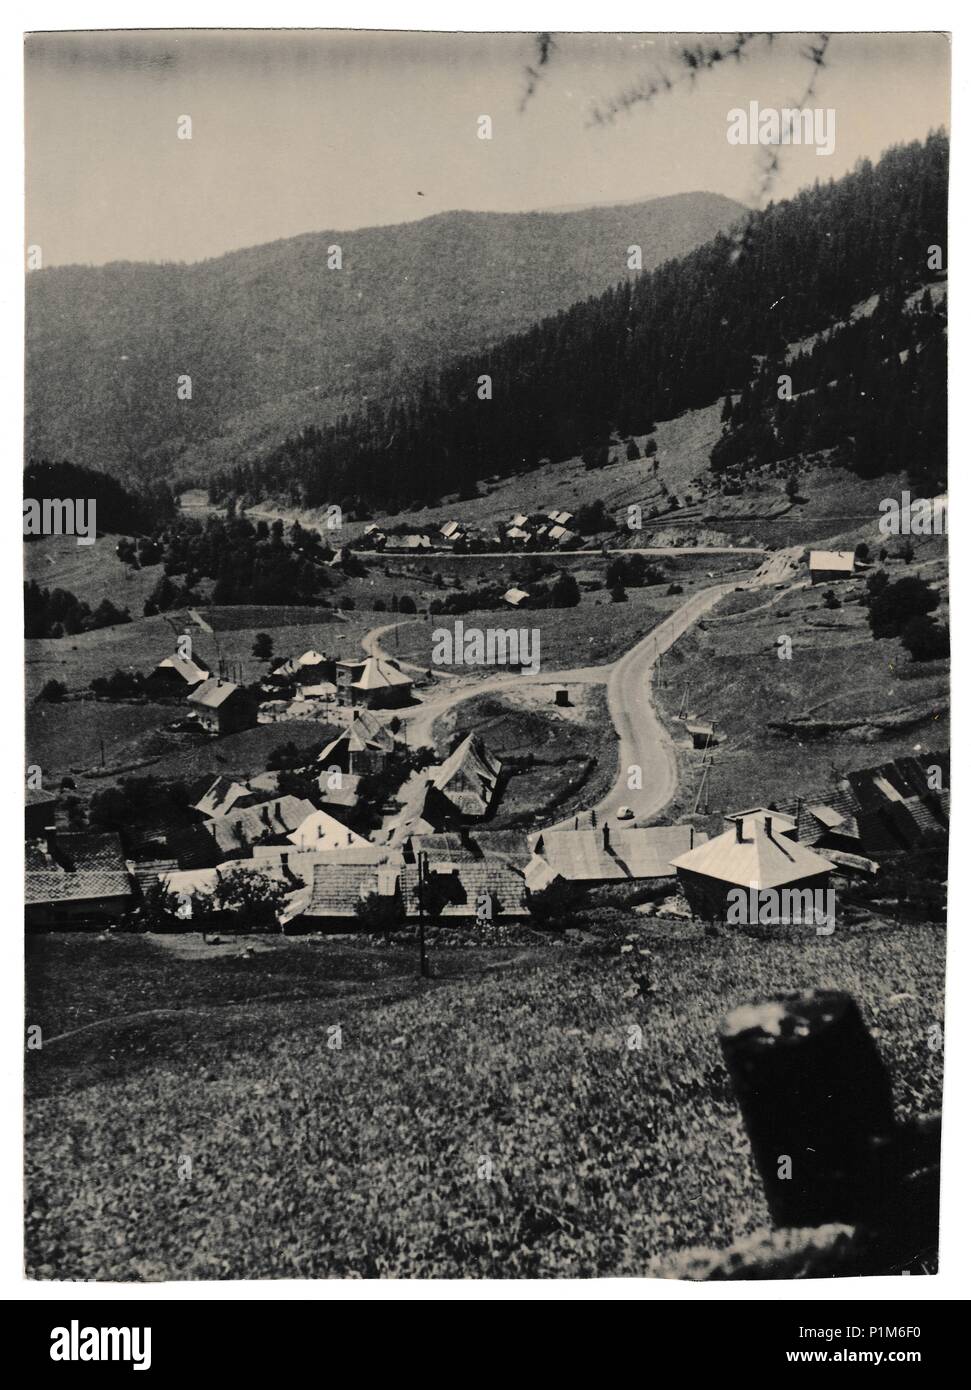 DONOVALY, THE CZECHOSLOVAK SOCIALIST REPUBLIC - CIRCA 1960s: Retro photo shows view on mountain village. Black & white vintage photography Stock Photo